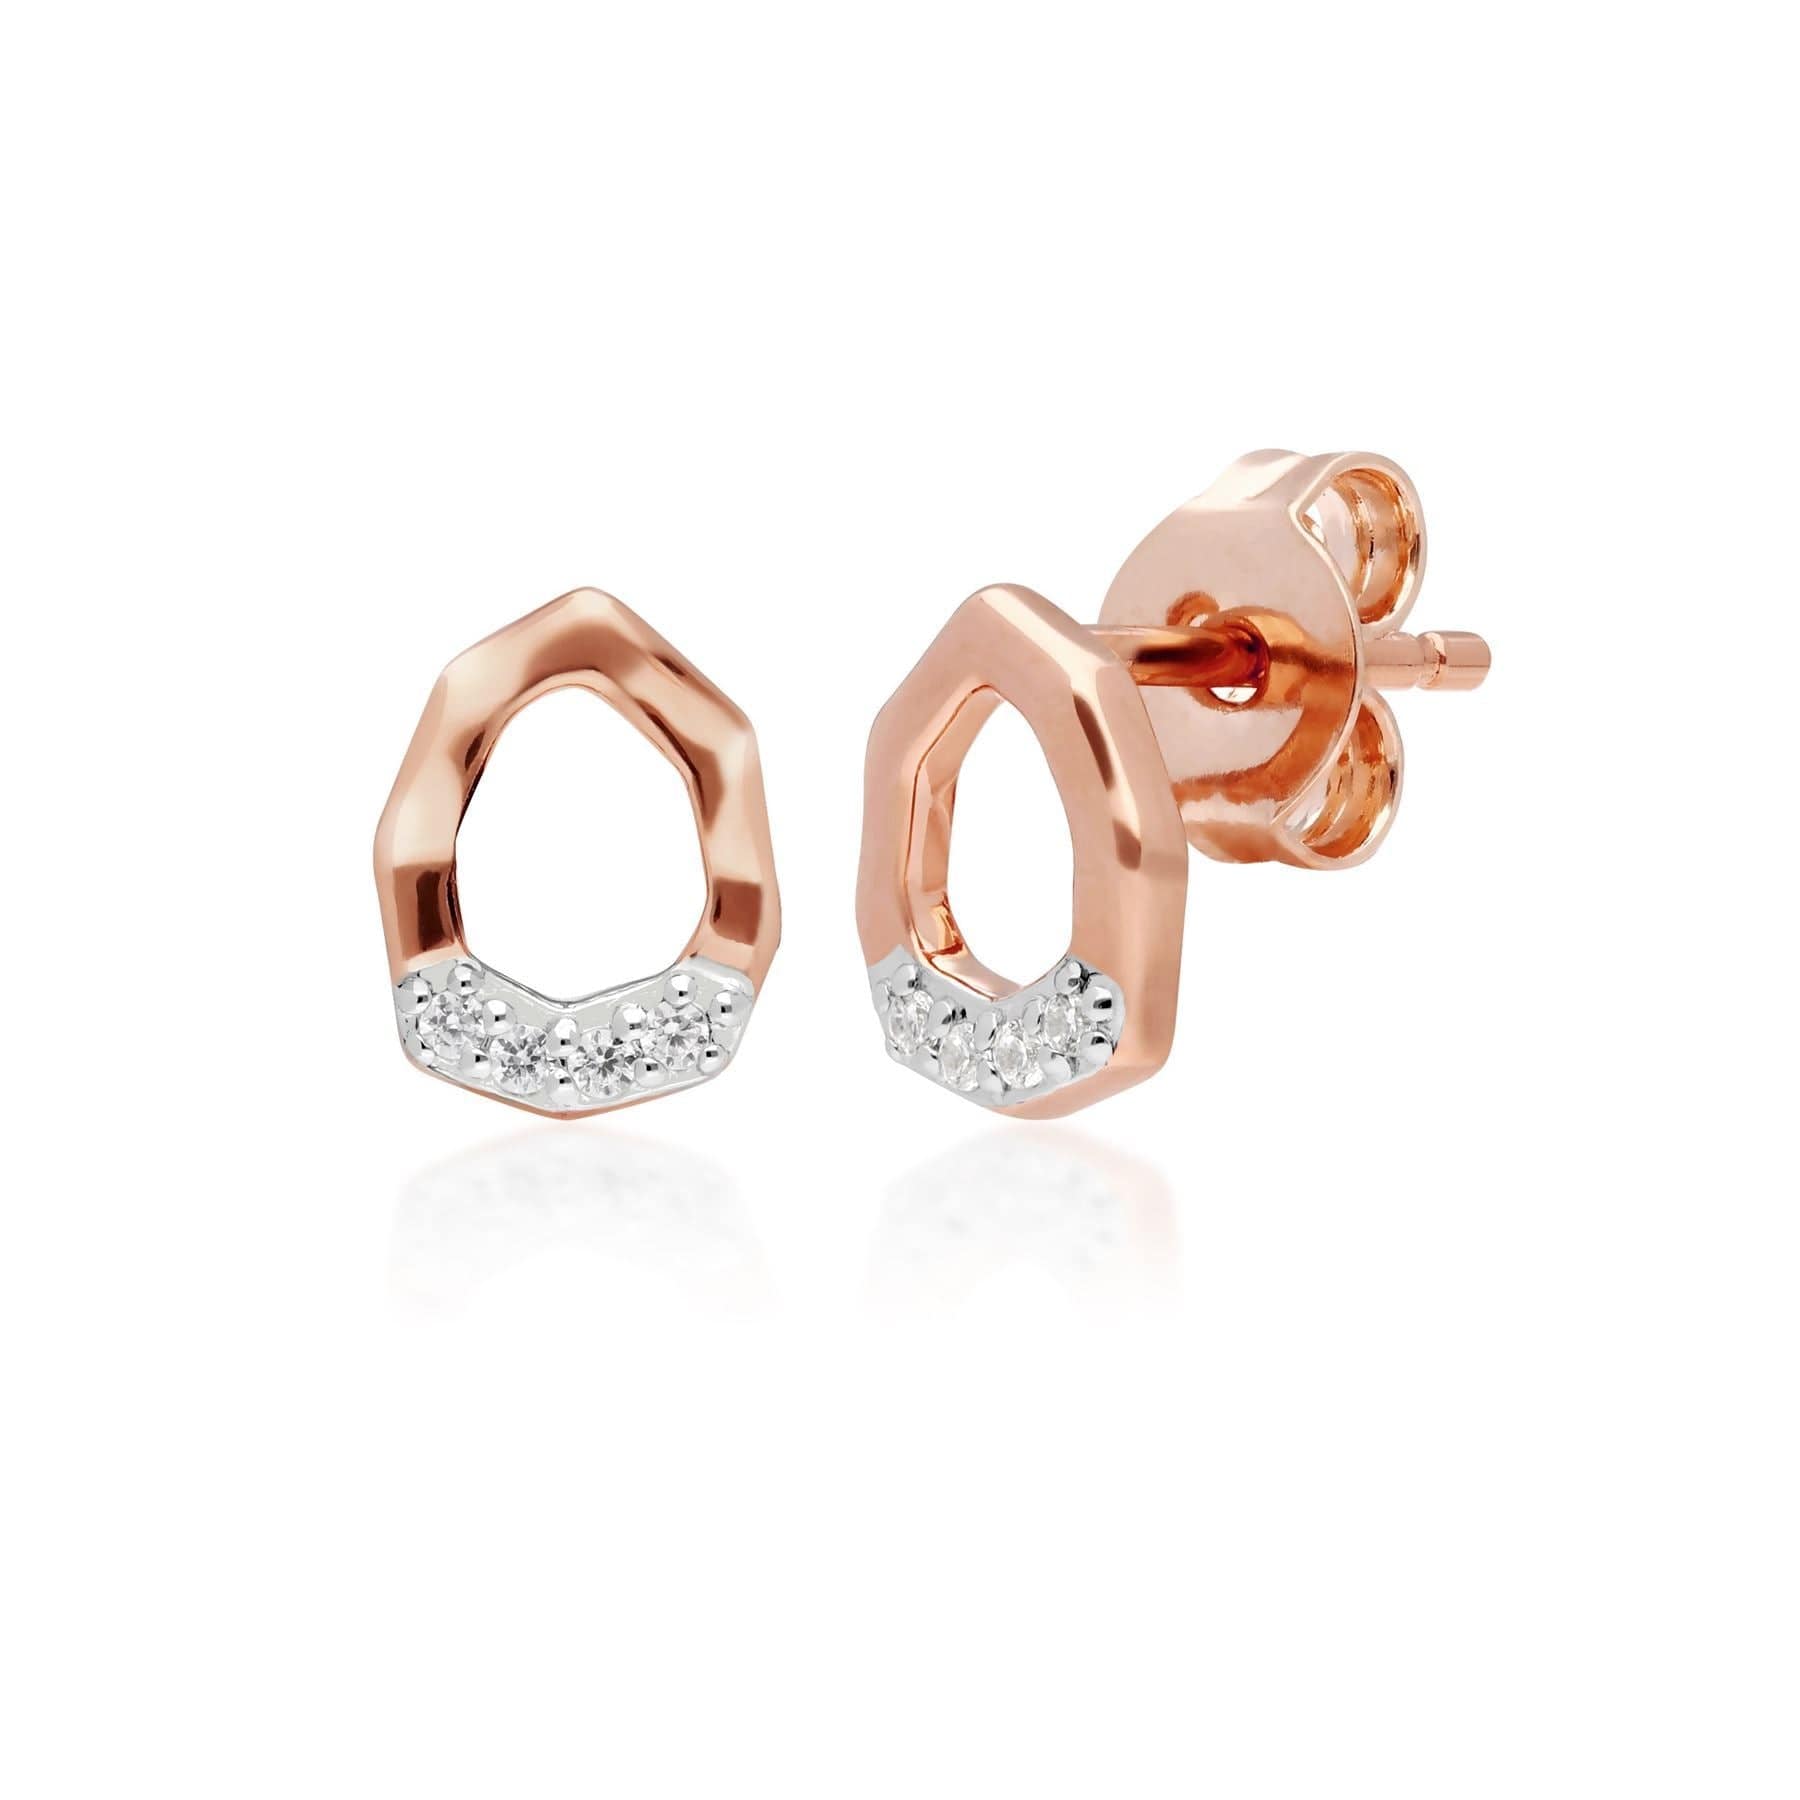 191P0737019-191E0401019 Diamond Pave Asymmetrical Pendant & Stud Earring Set in 9ct Rose Gold 3